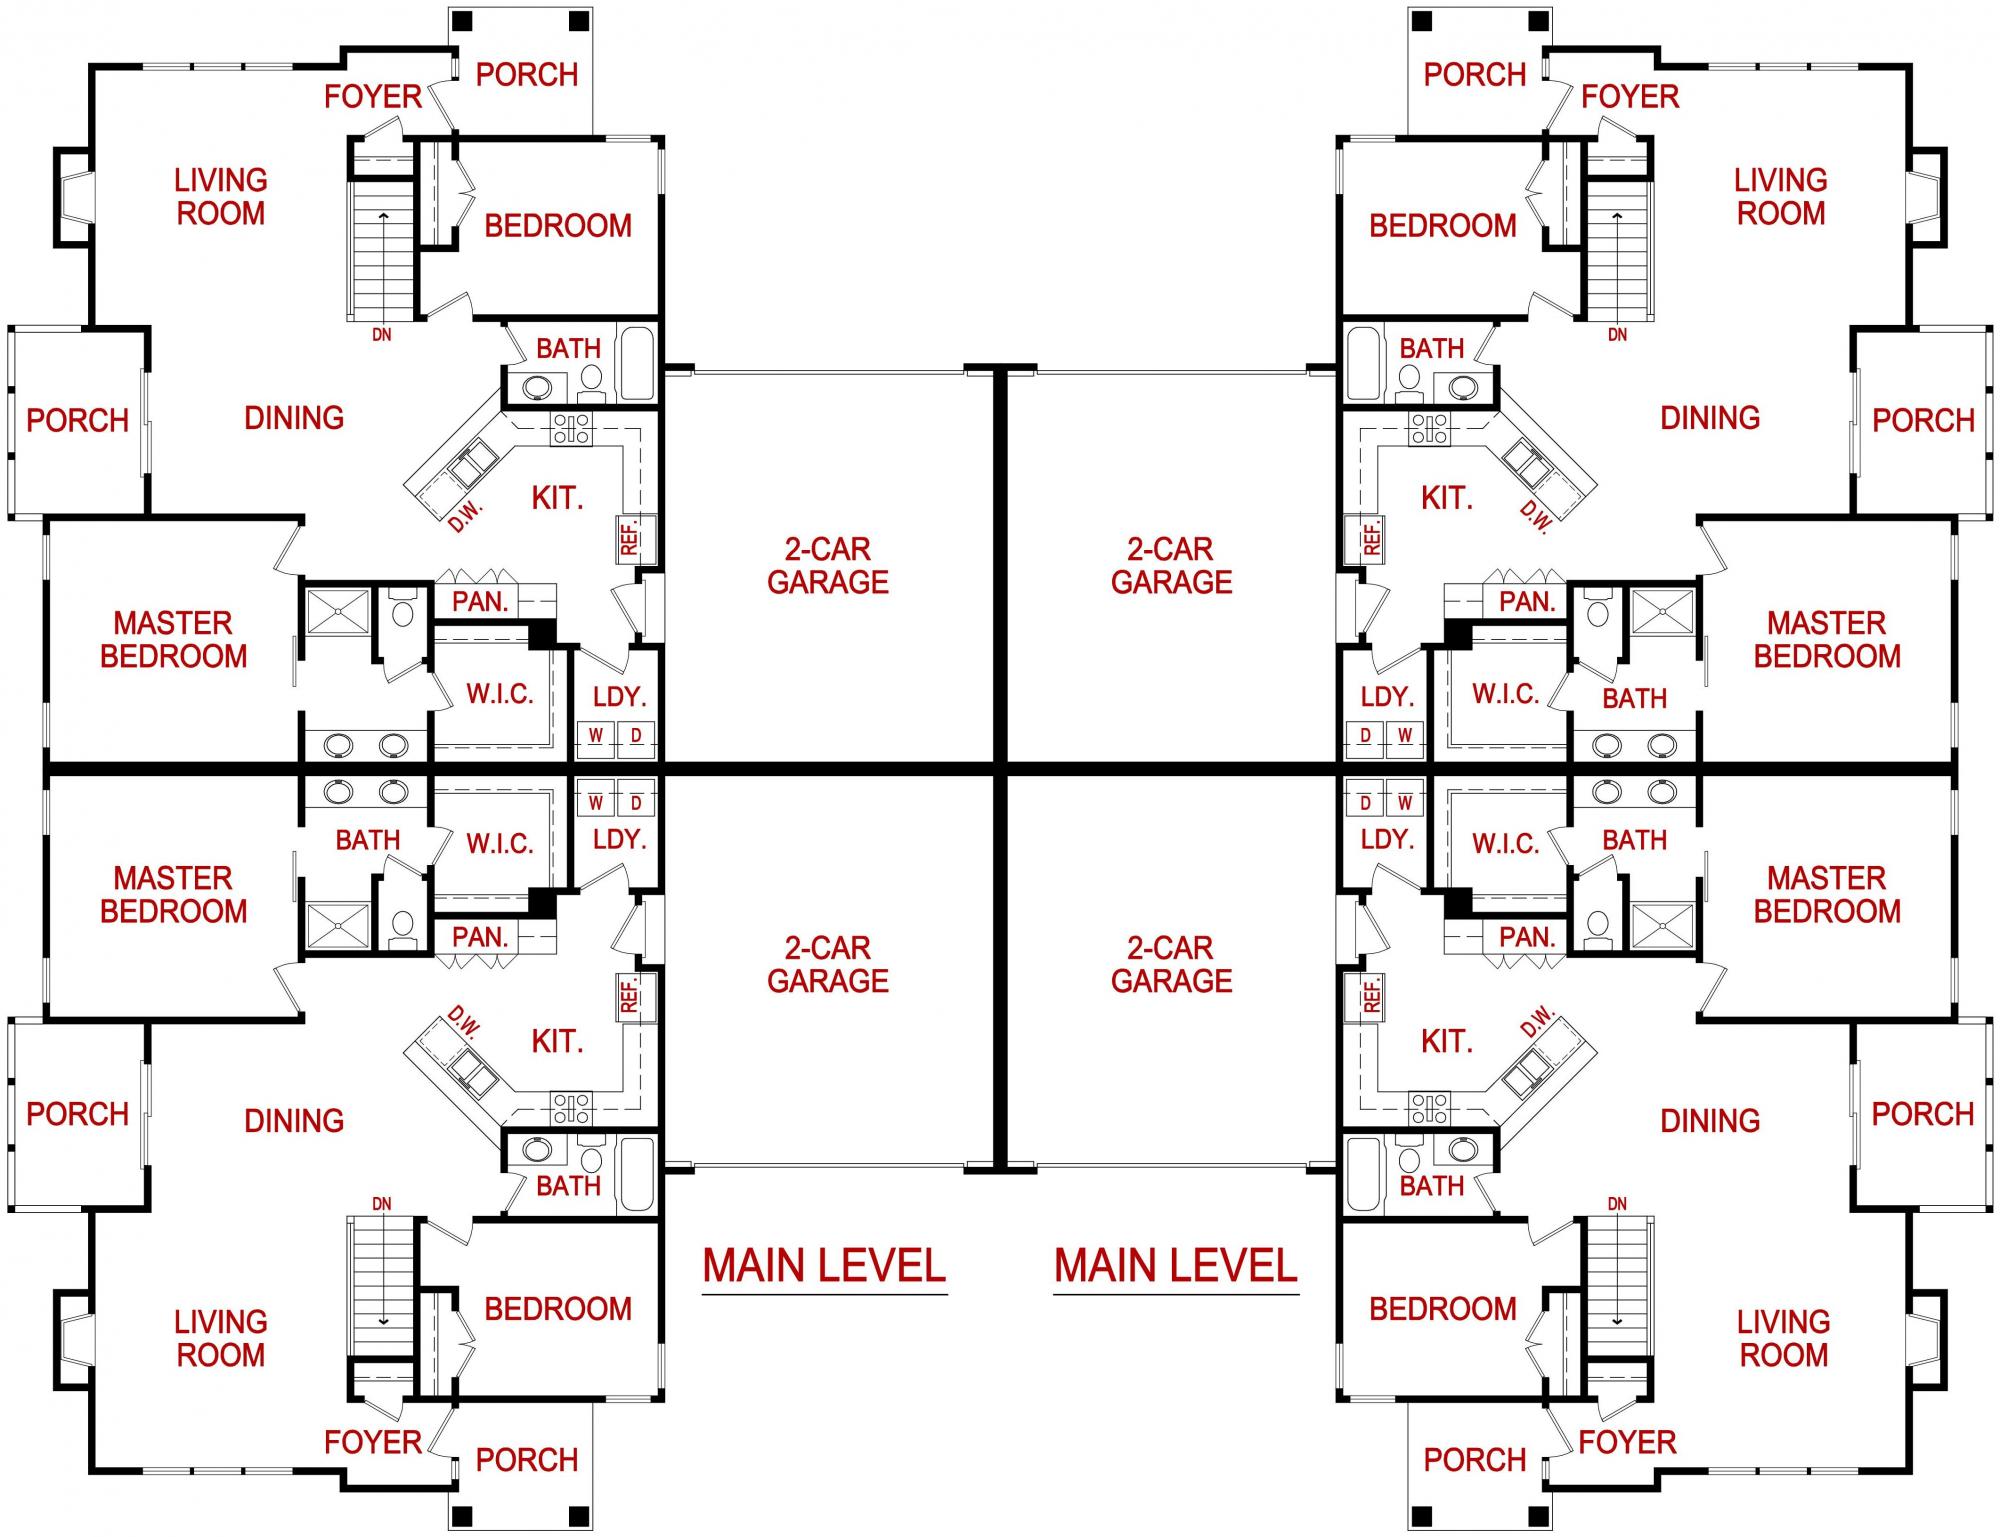 main level floor plan for the minor model from Lambie custom homes